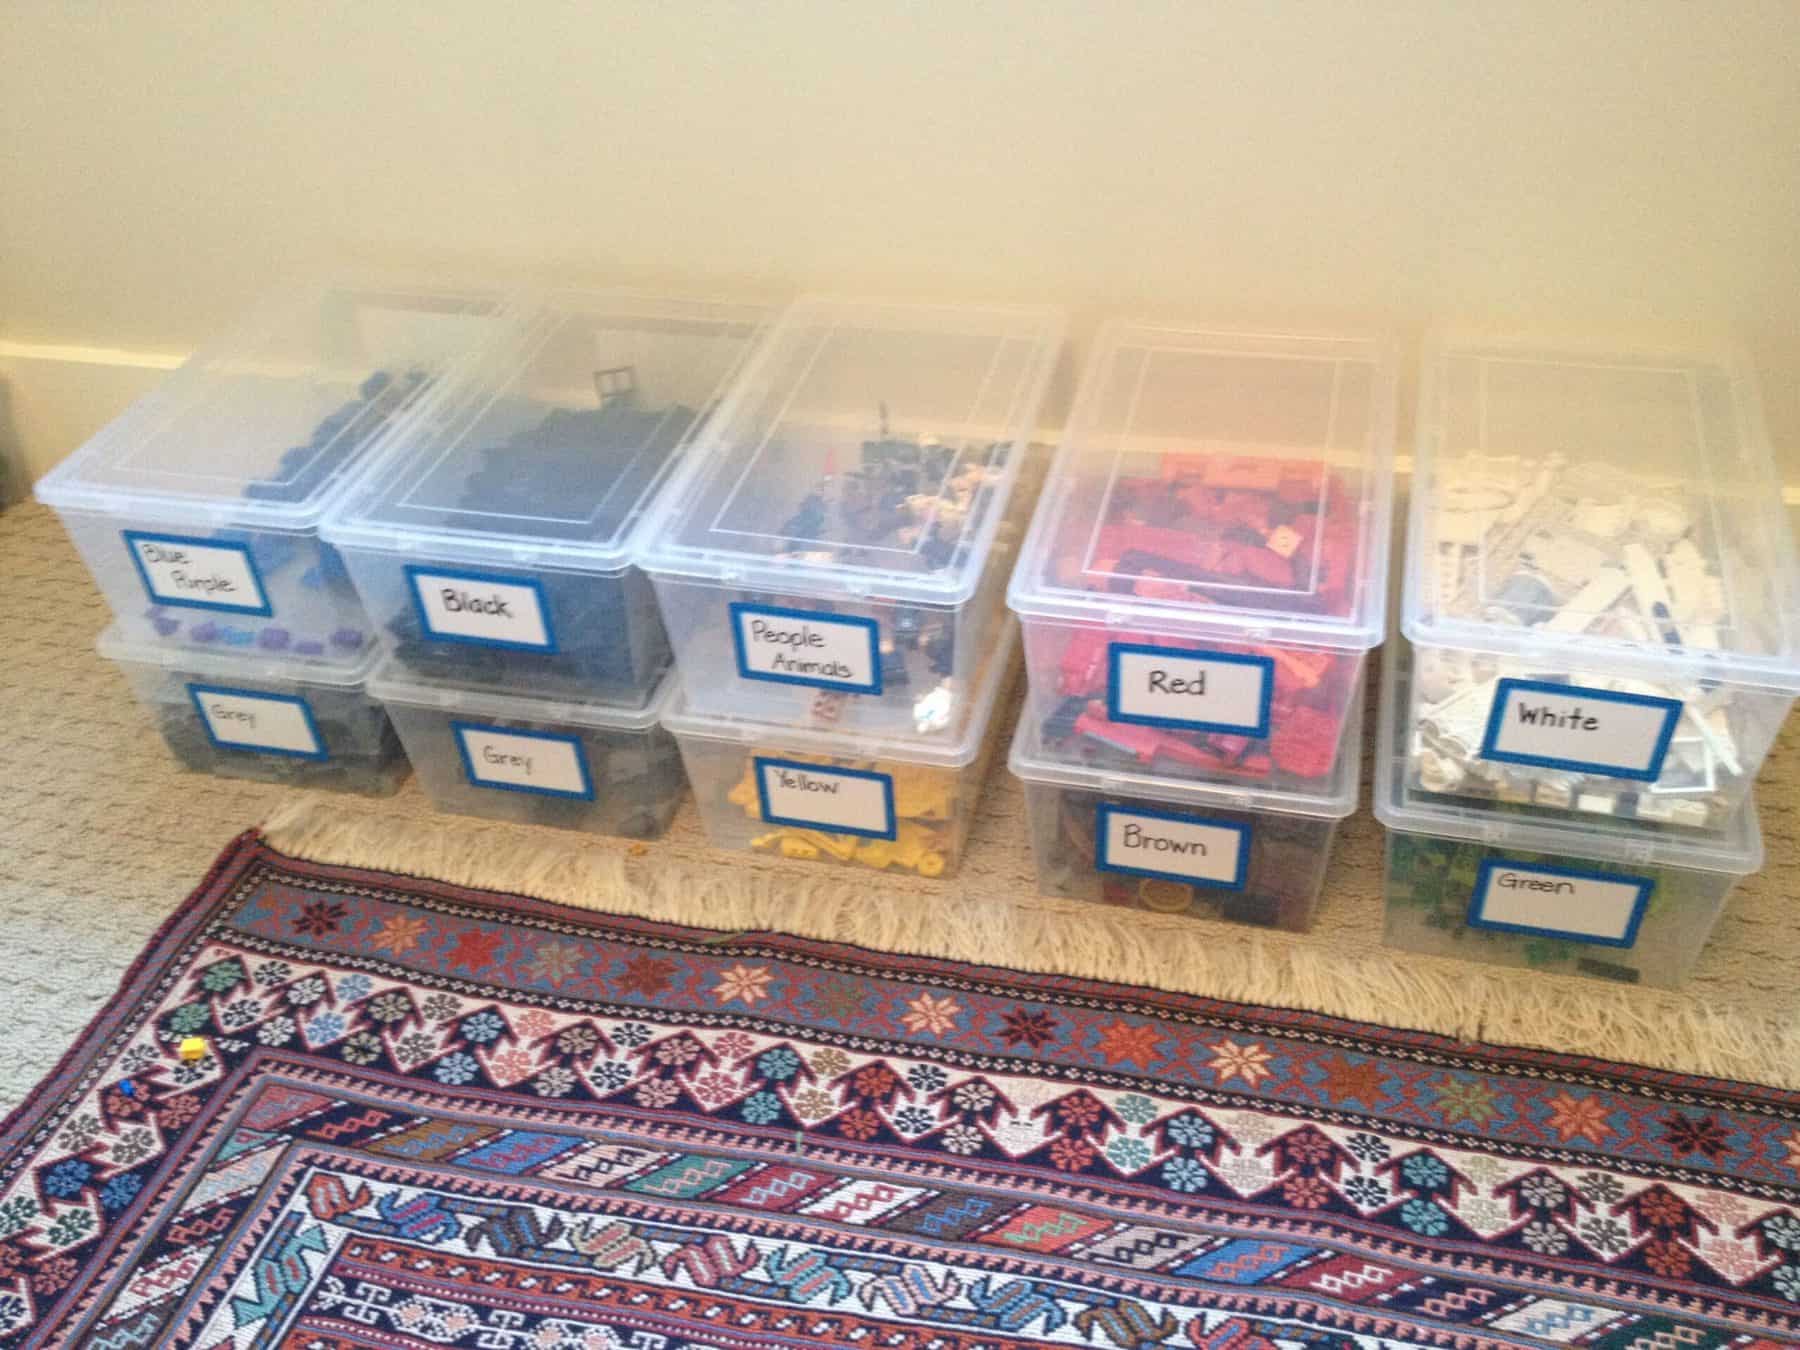 Lego Storage & Organisation Ideas  Lego organization, Lego storage, Lego  storage organization